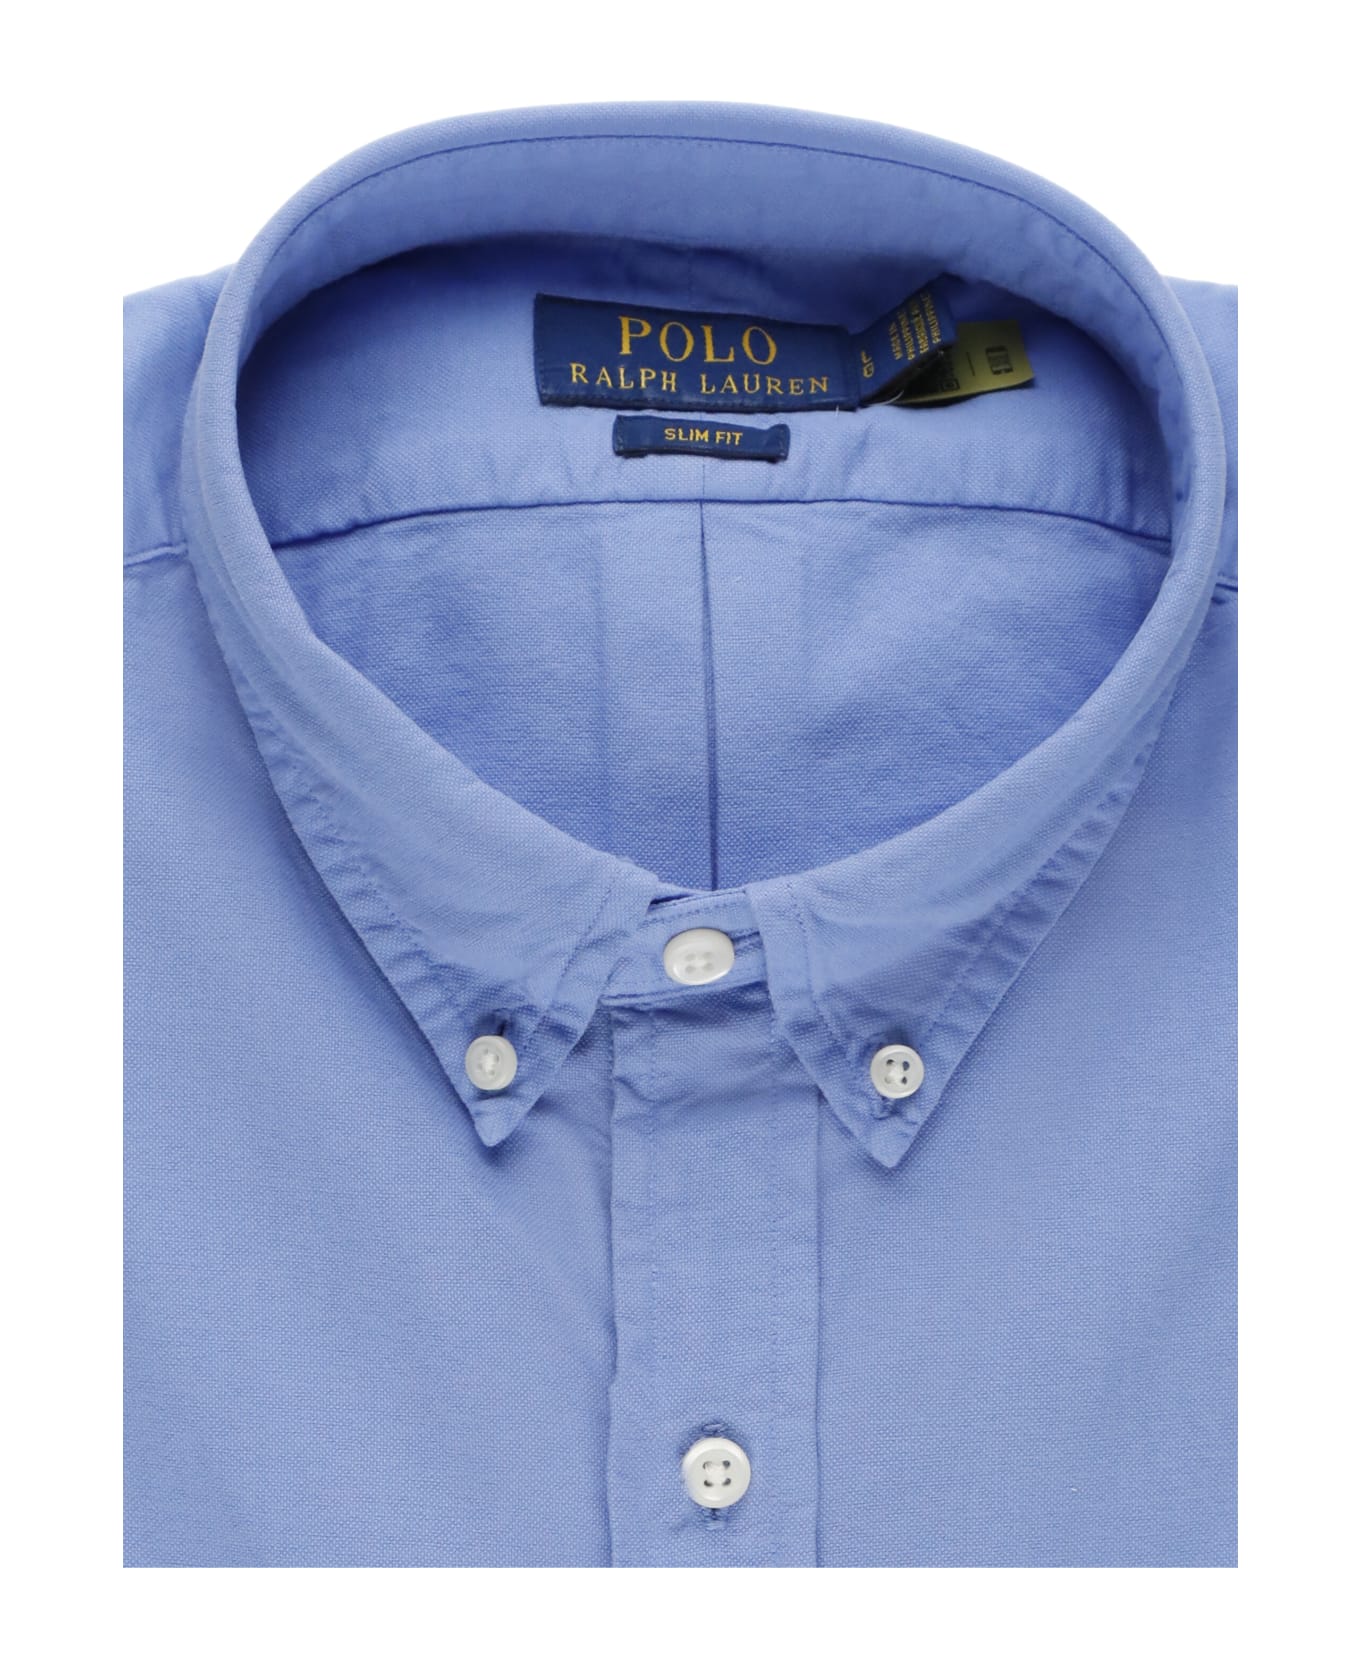 Polo Ralph Lauren Shirt With Pony - Harbor Island Blue